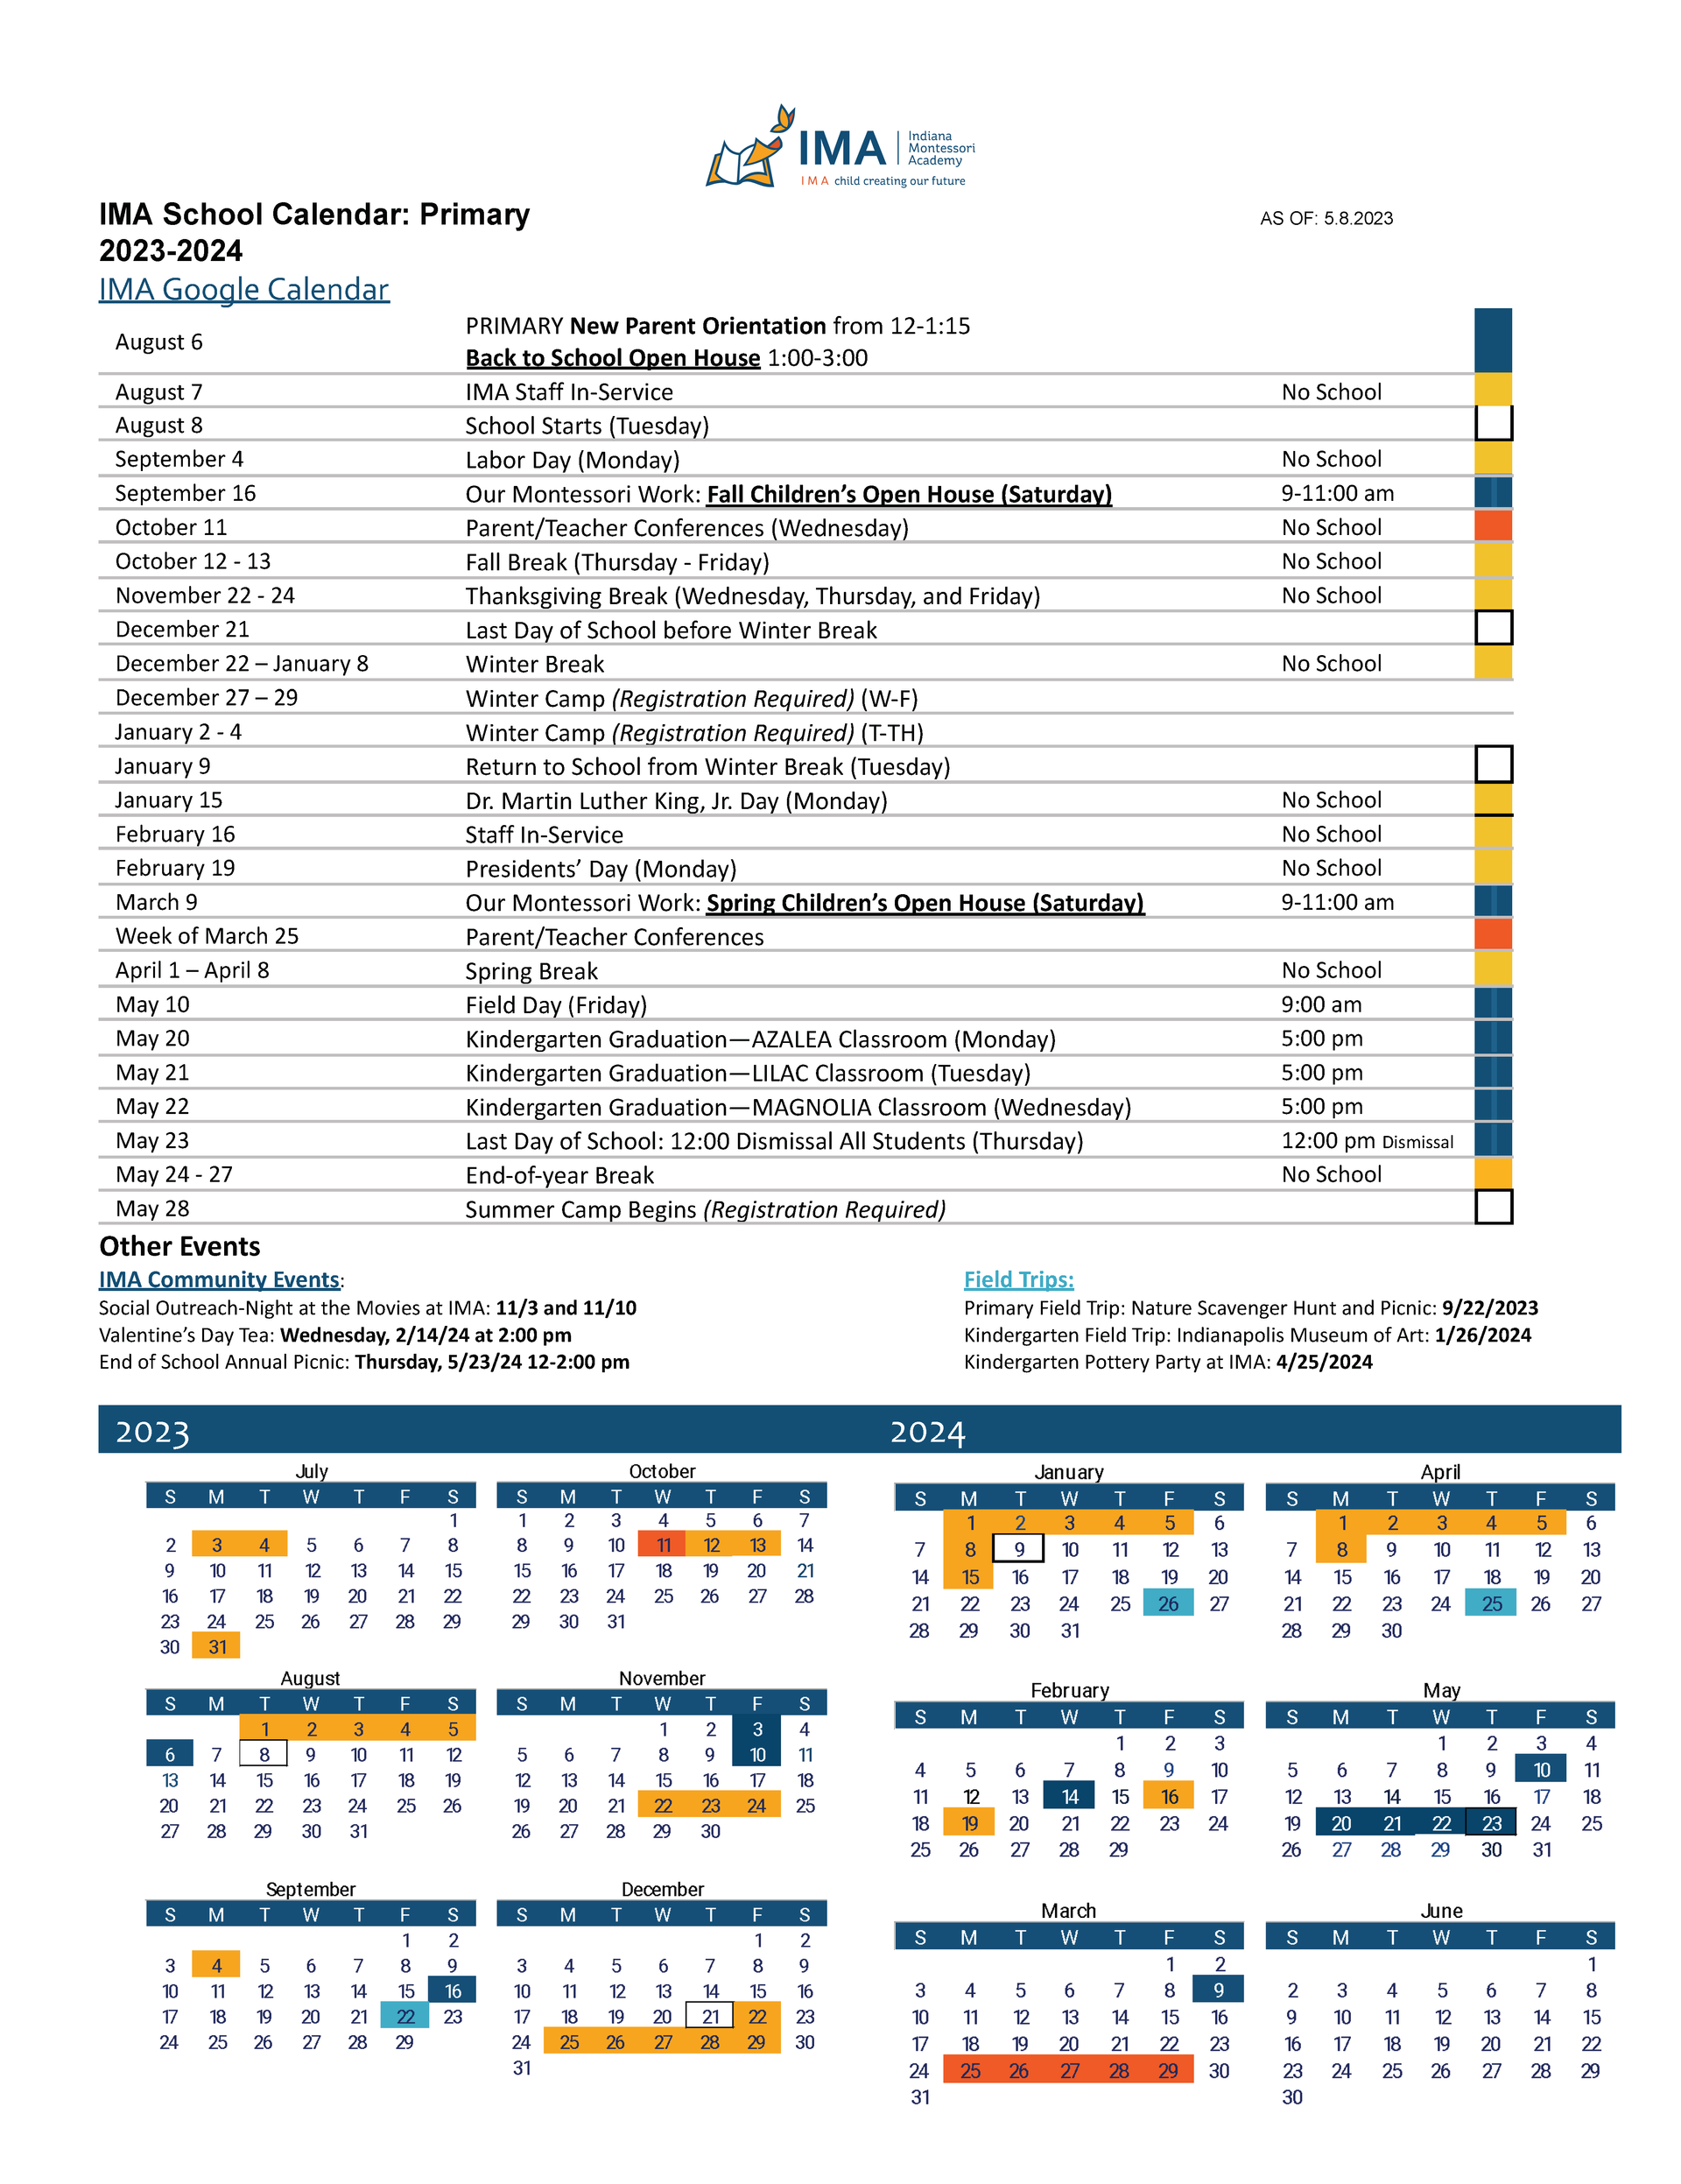 IMA Primary Calendar